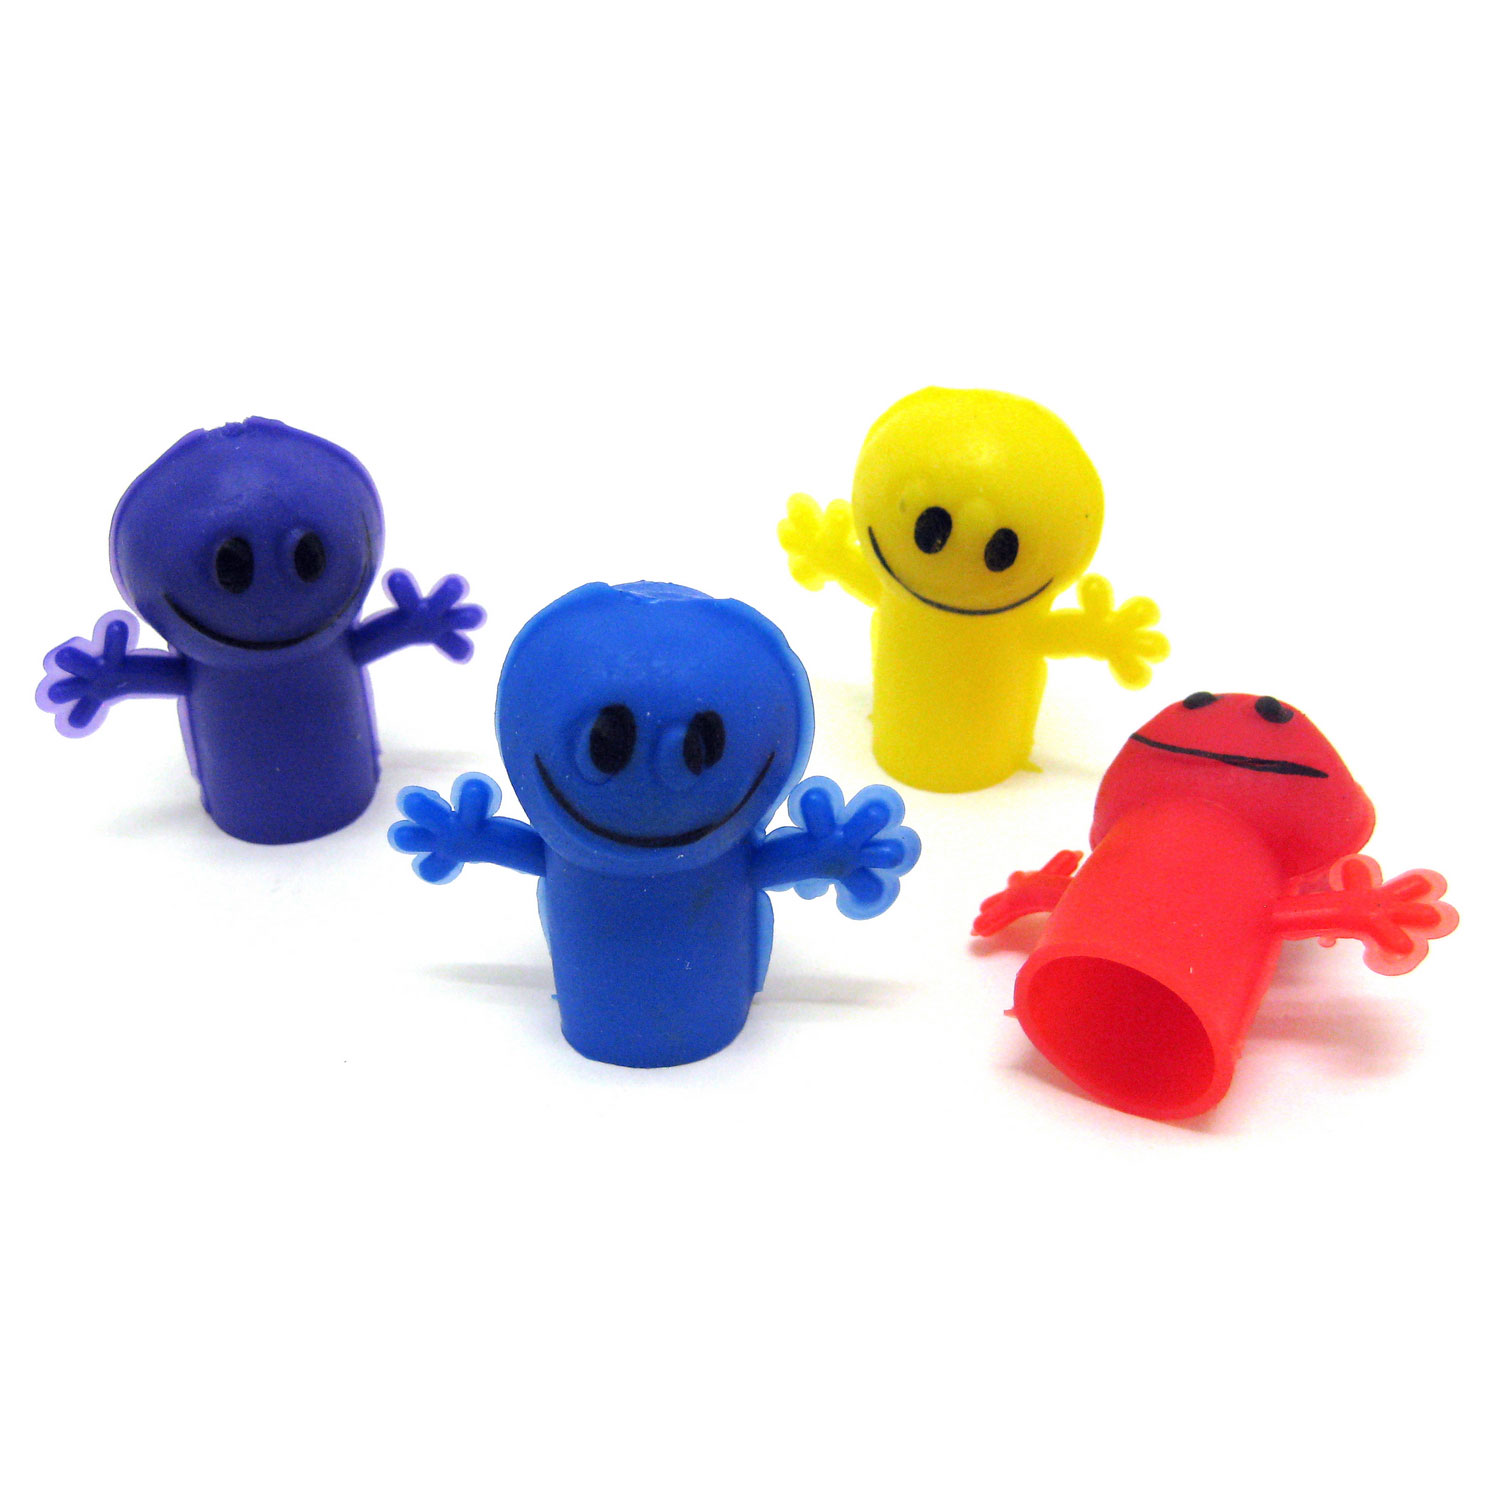 NEW Rubber Alien Finger Puppet Toy Party Favor 12 LOT 